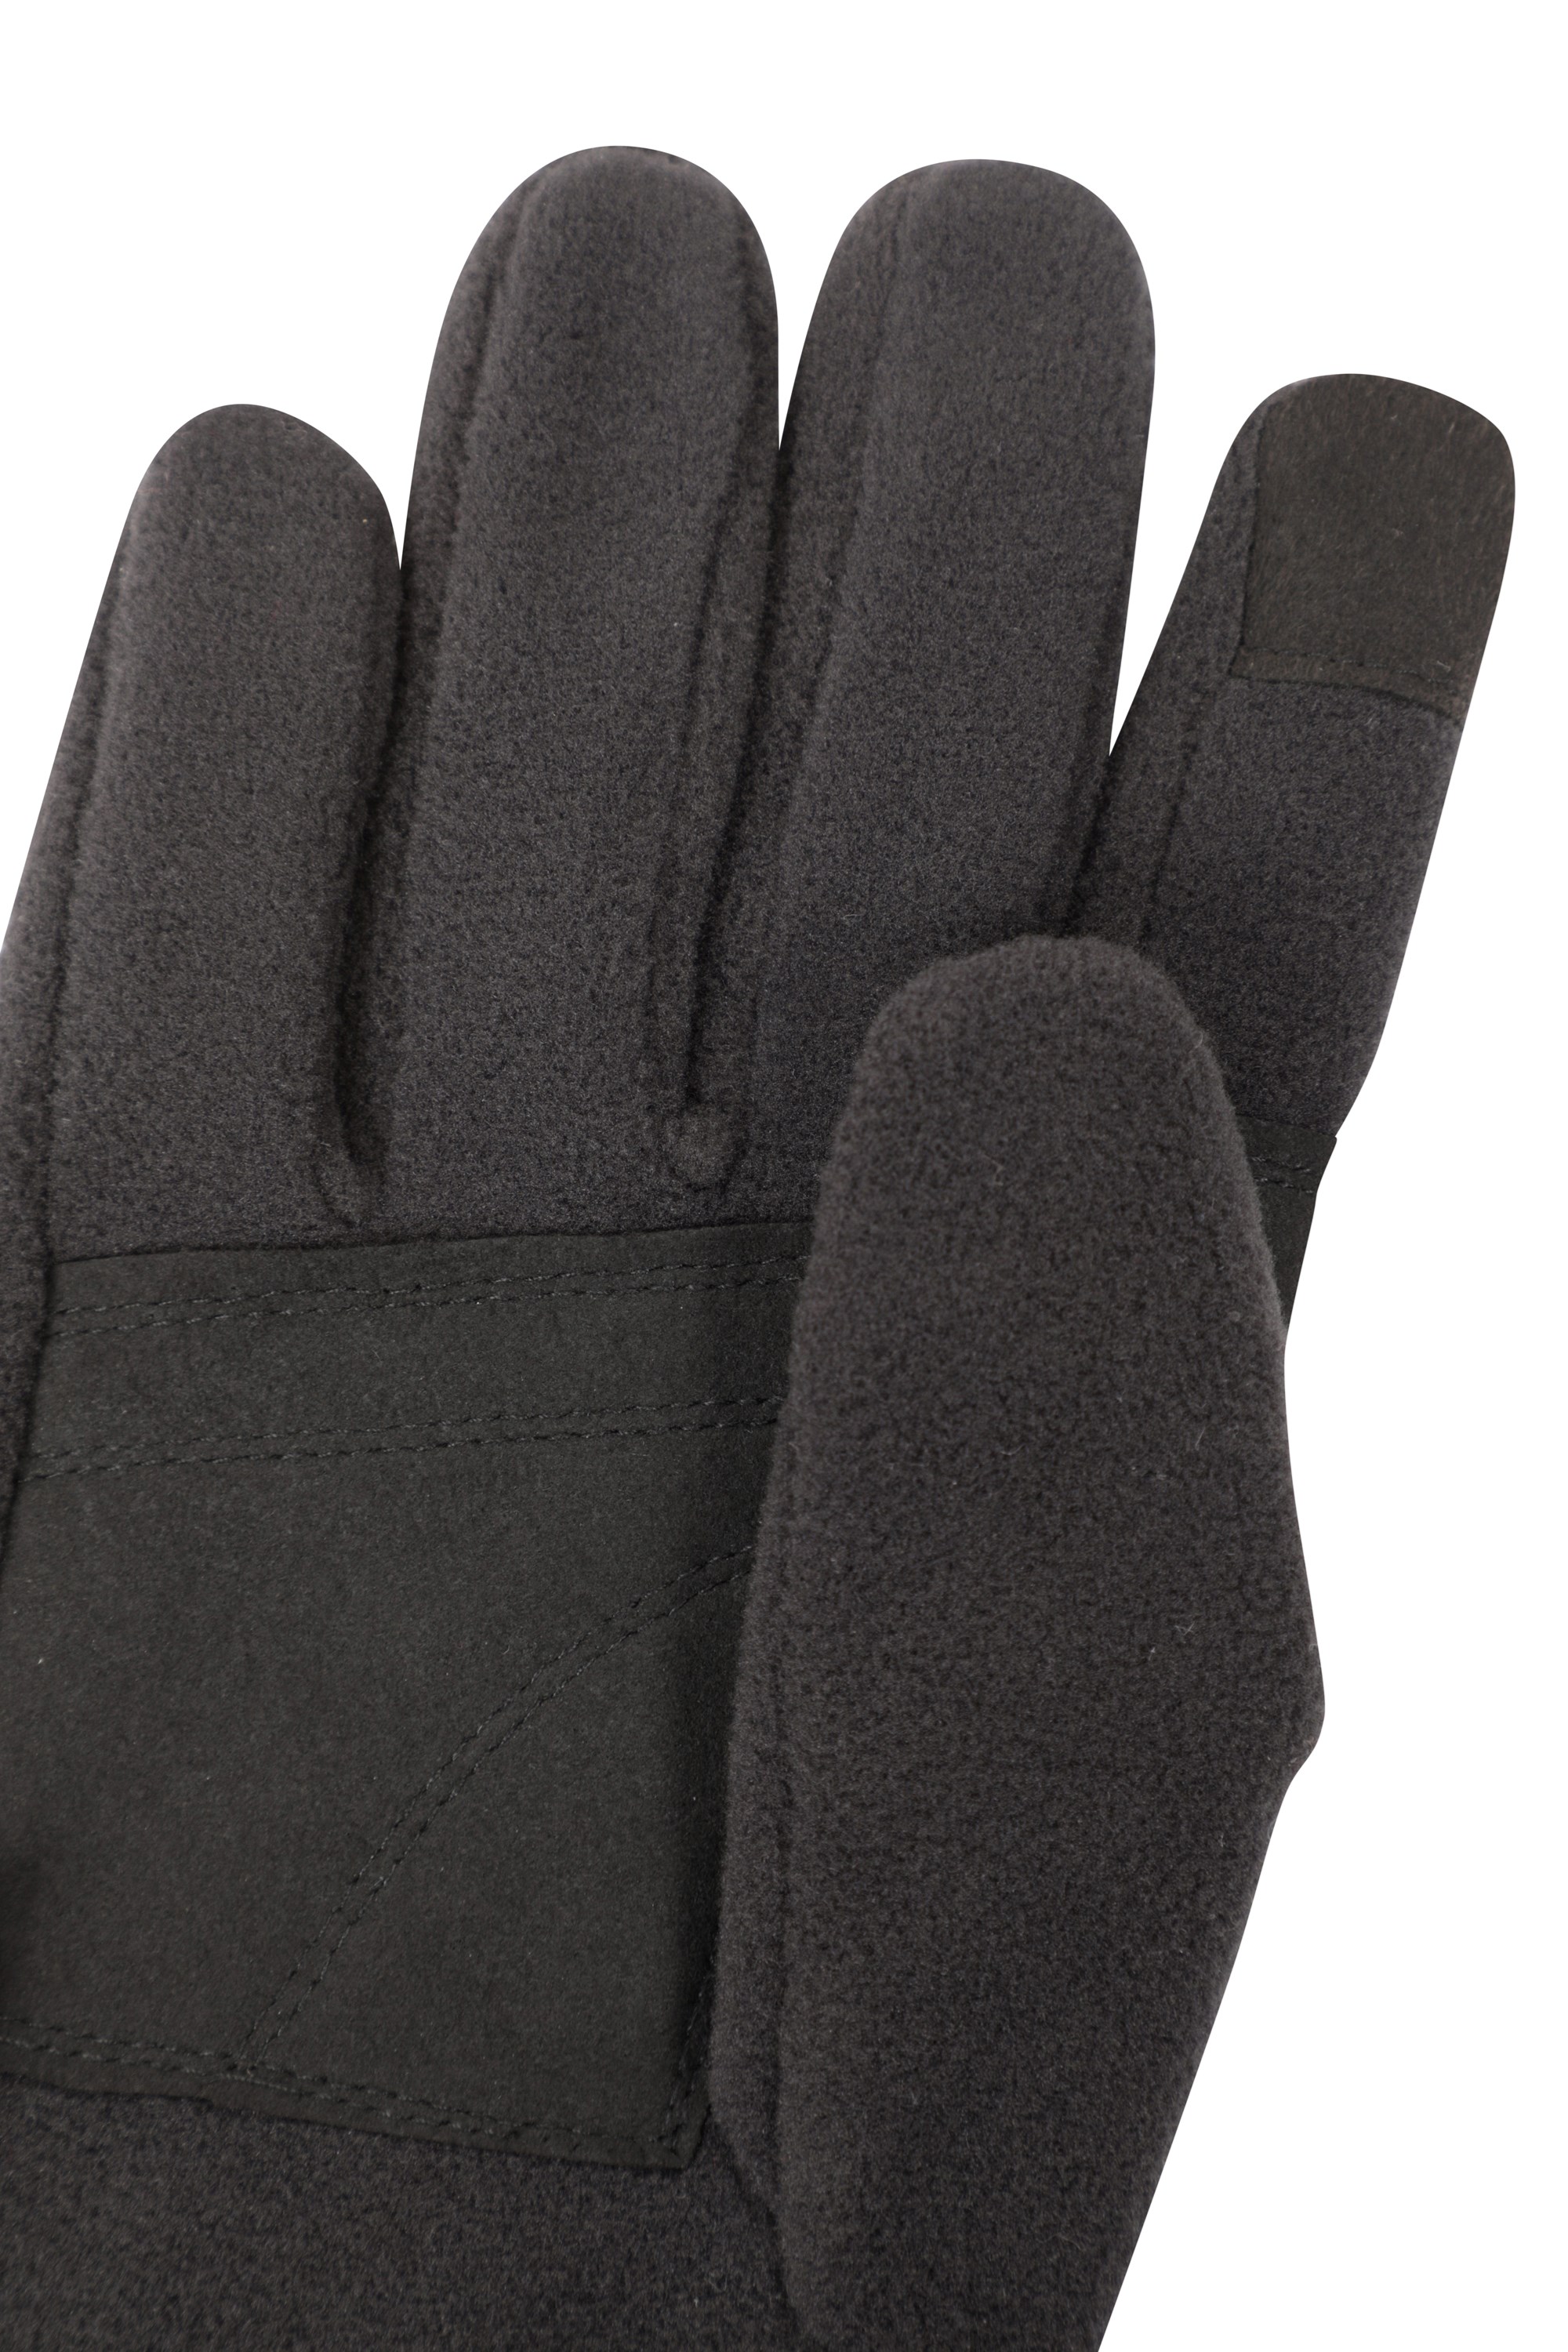 Womens Polartec Touch Screen Gloves | Mountain Warehouse US